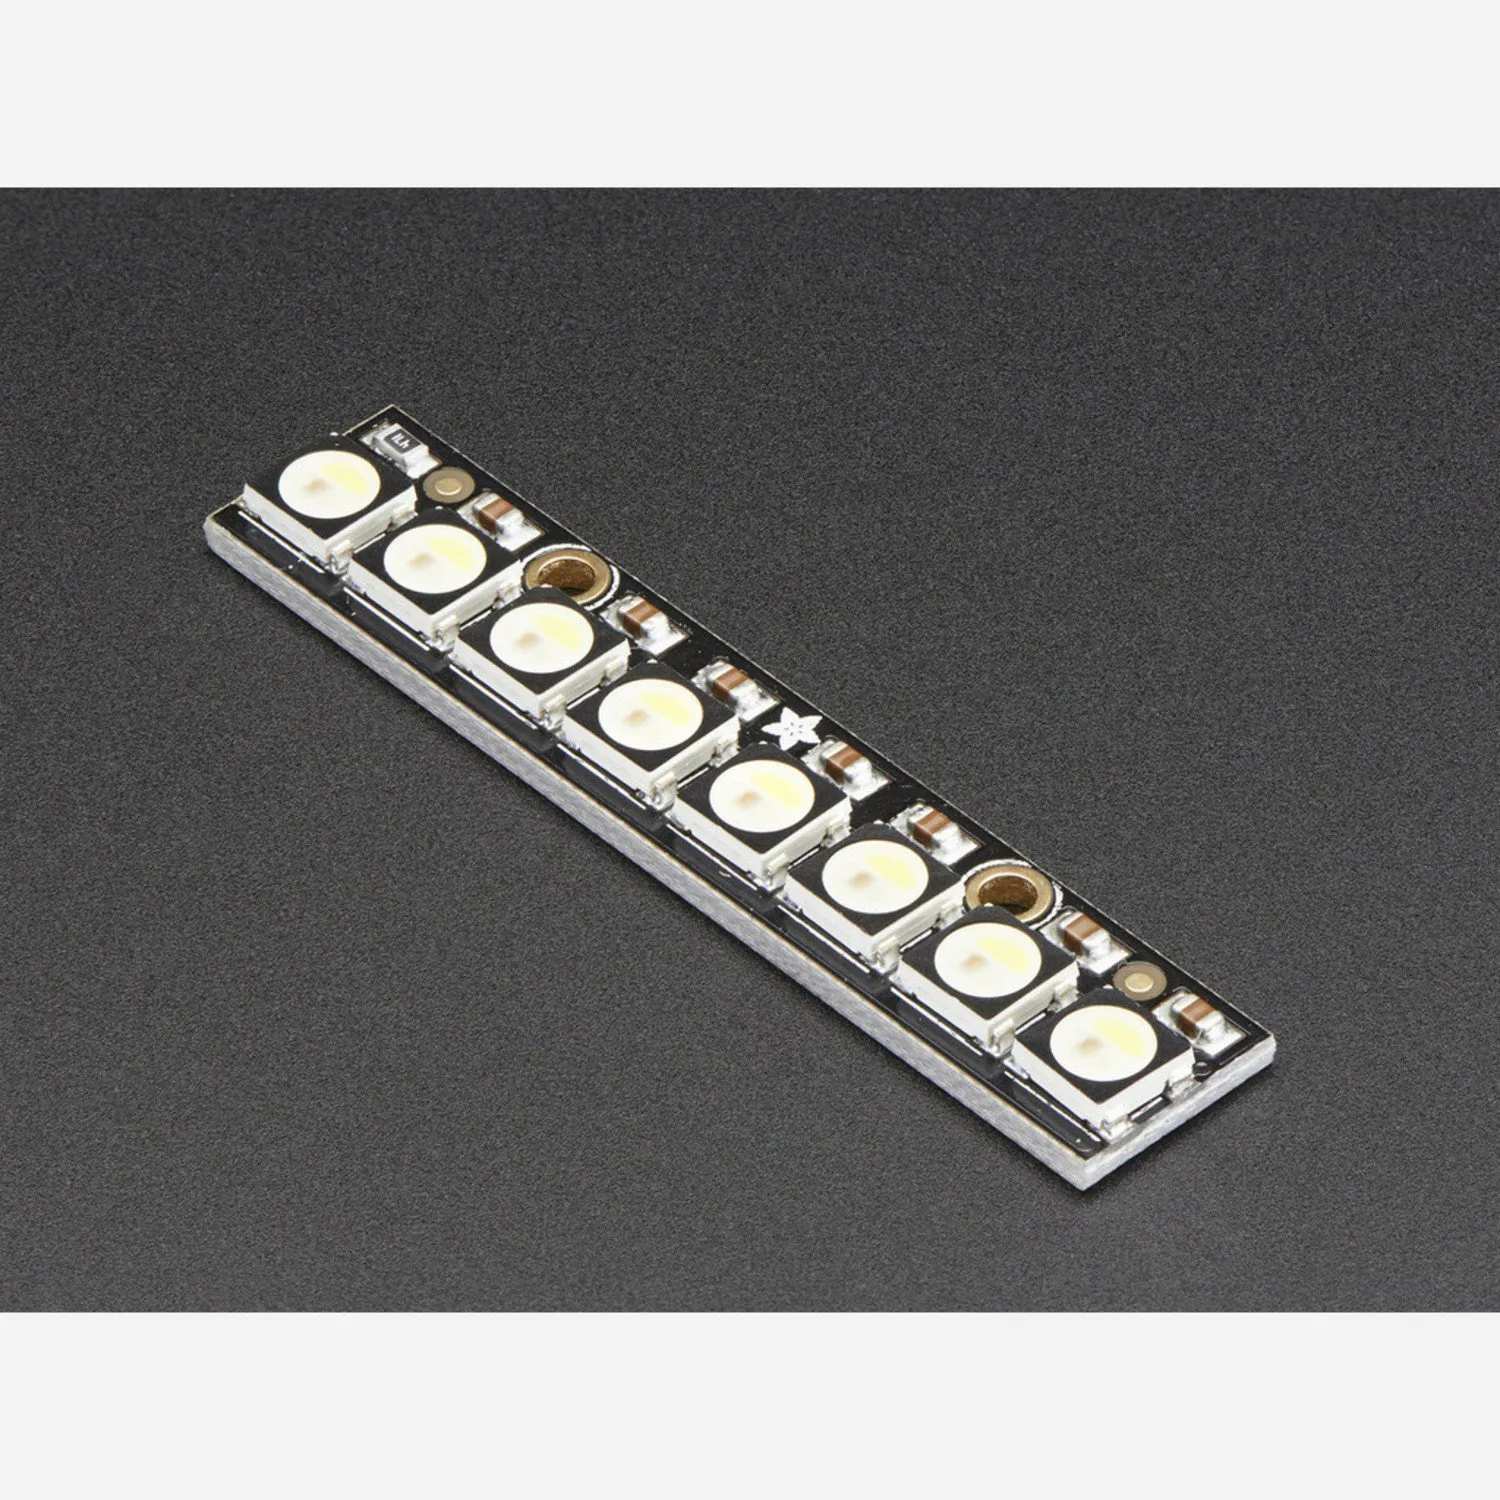 Photo of NeoPixel Stick - 8 x 5050 RGBW LEDs - Cool White - ~6000K